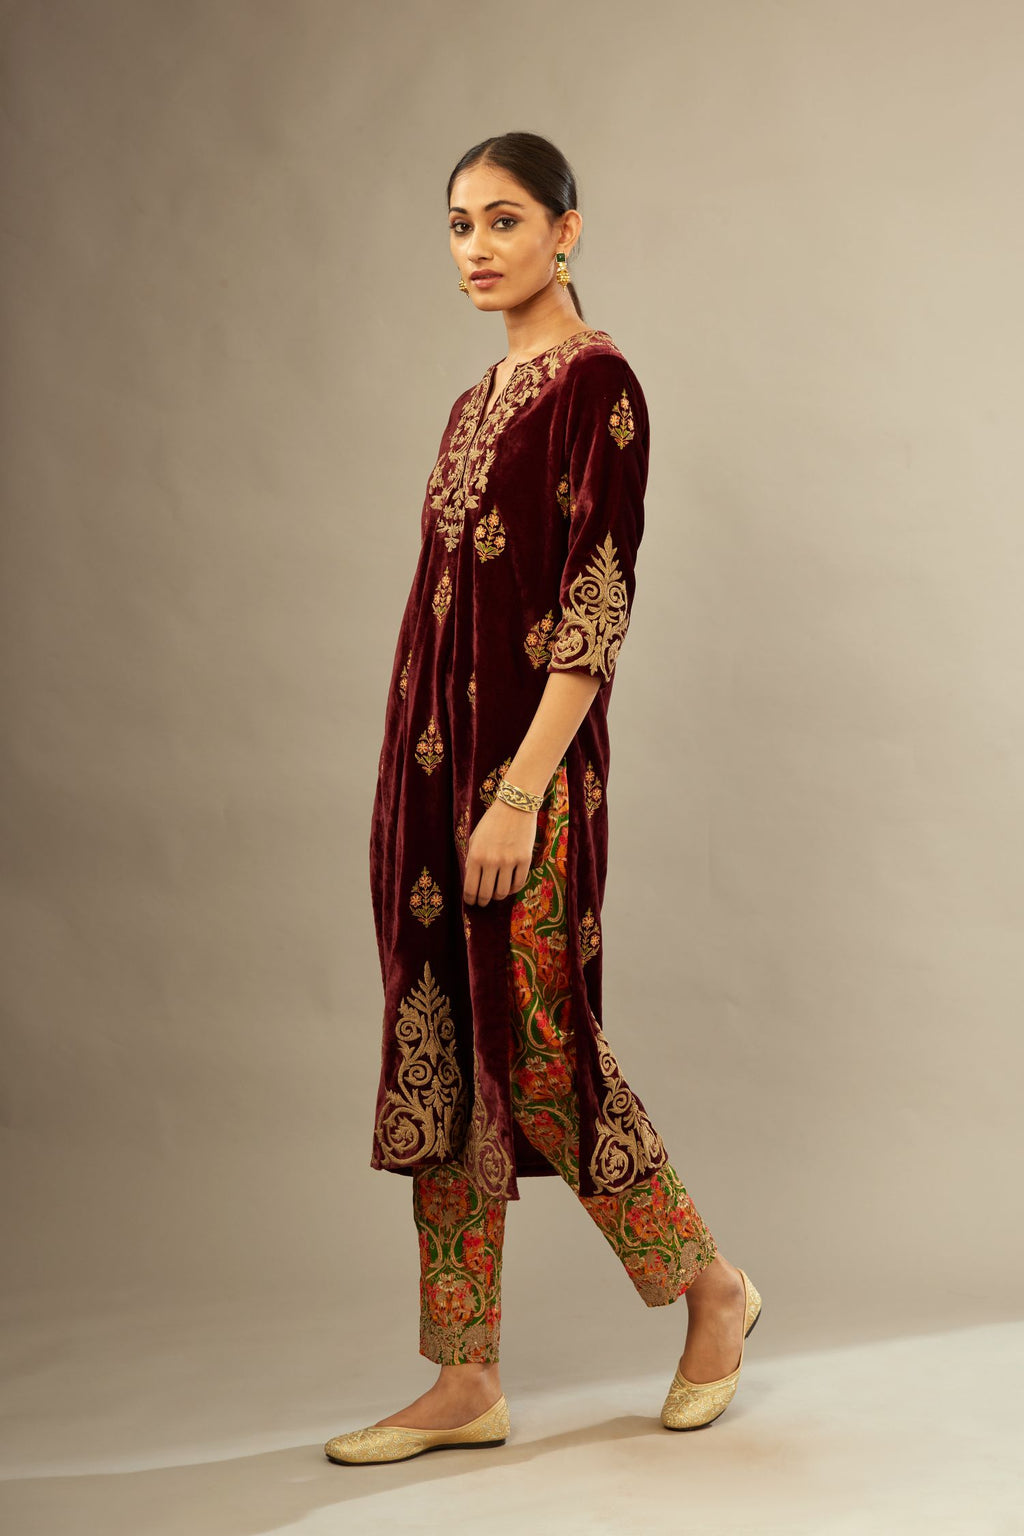 Marron silk velvet lined kurta set with light gold dori embroidery and contrast colored boota all-over the kurta.